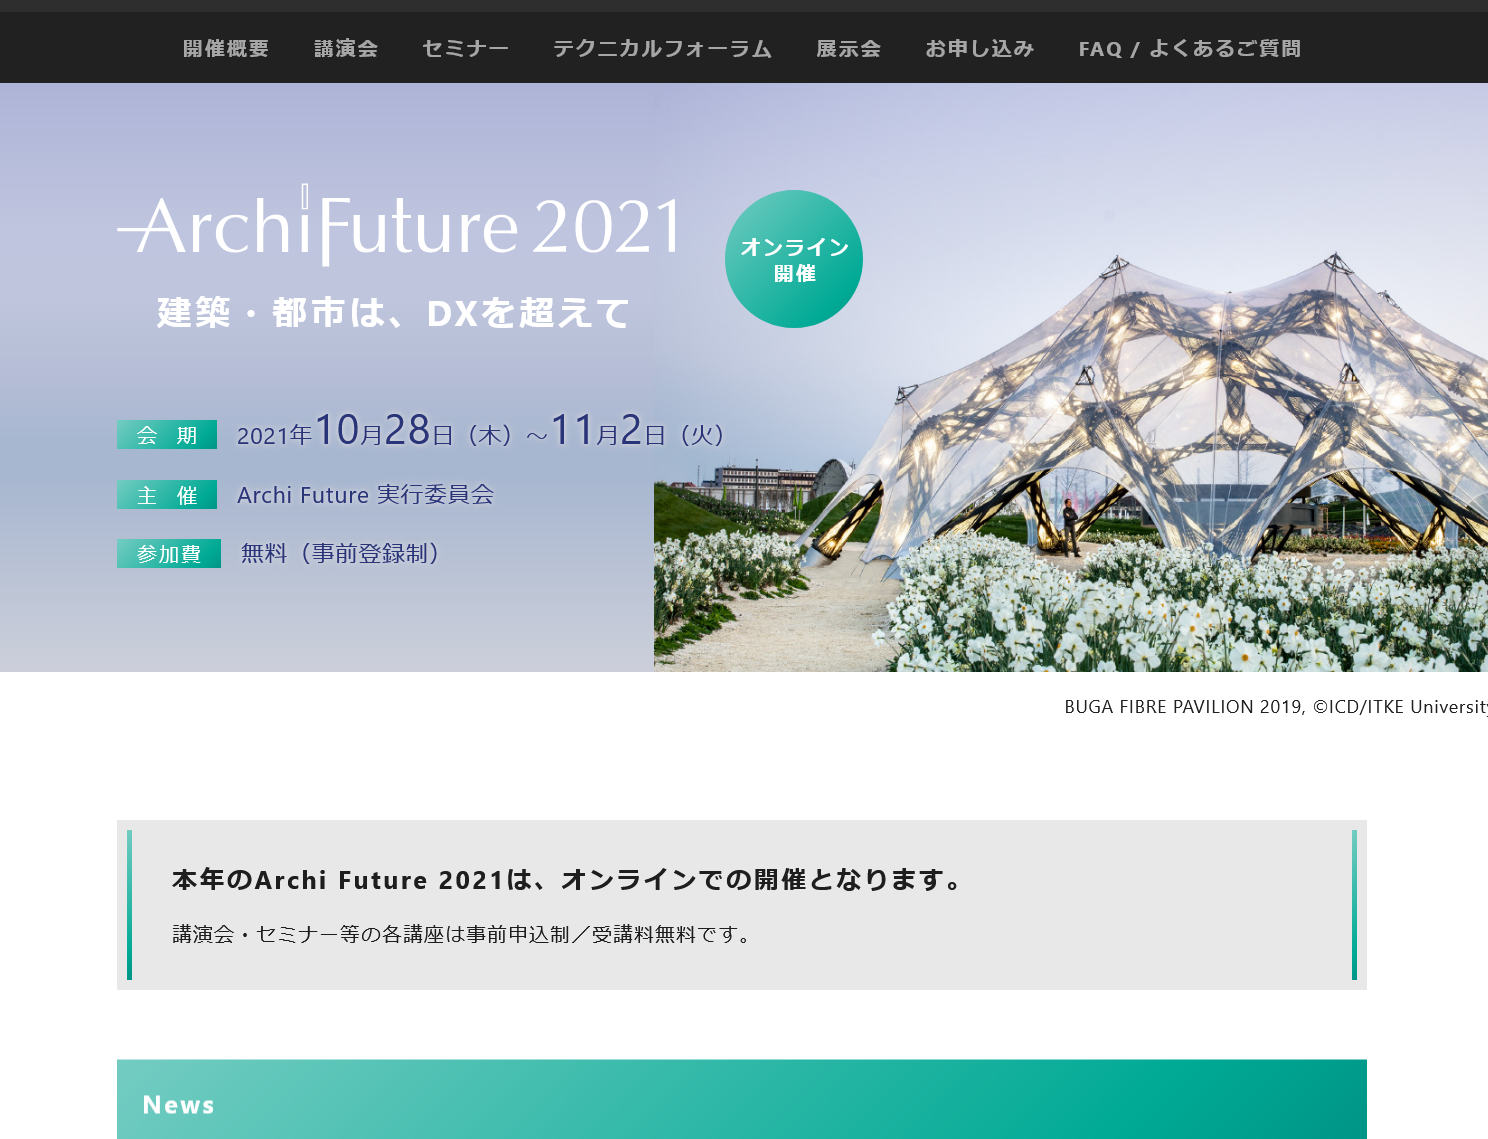 Archi Future 2021をx倍楽しむ方法